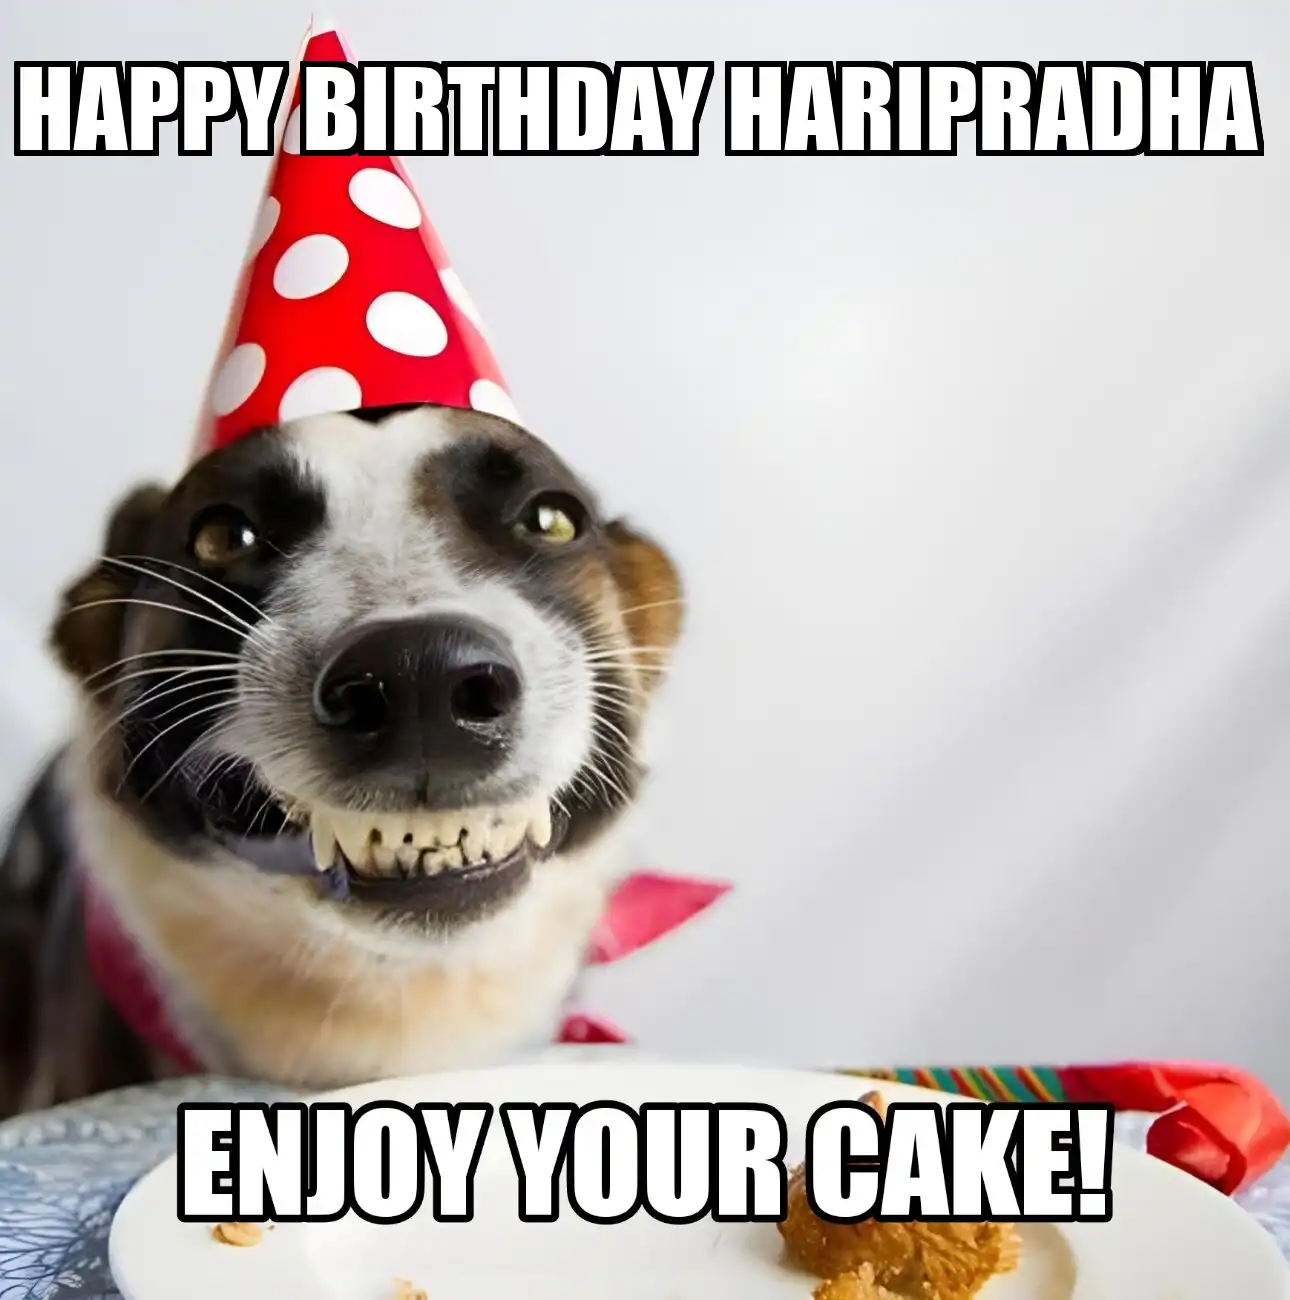 Happy Birthday Haripradha Enjoy Your Cake Dog Meme